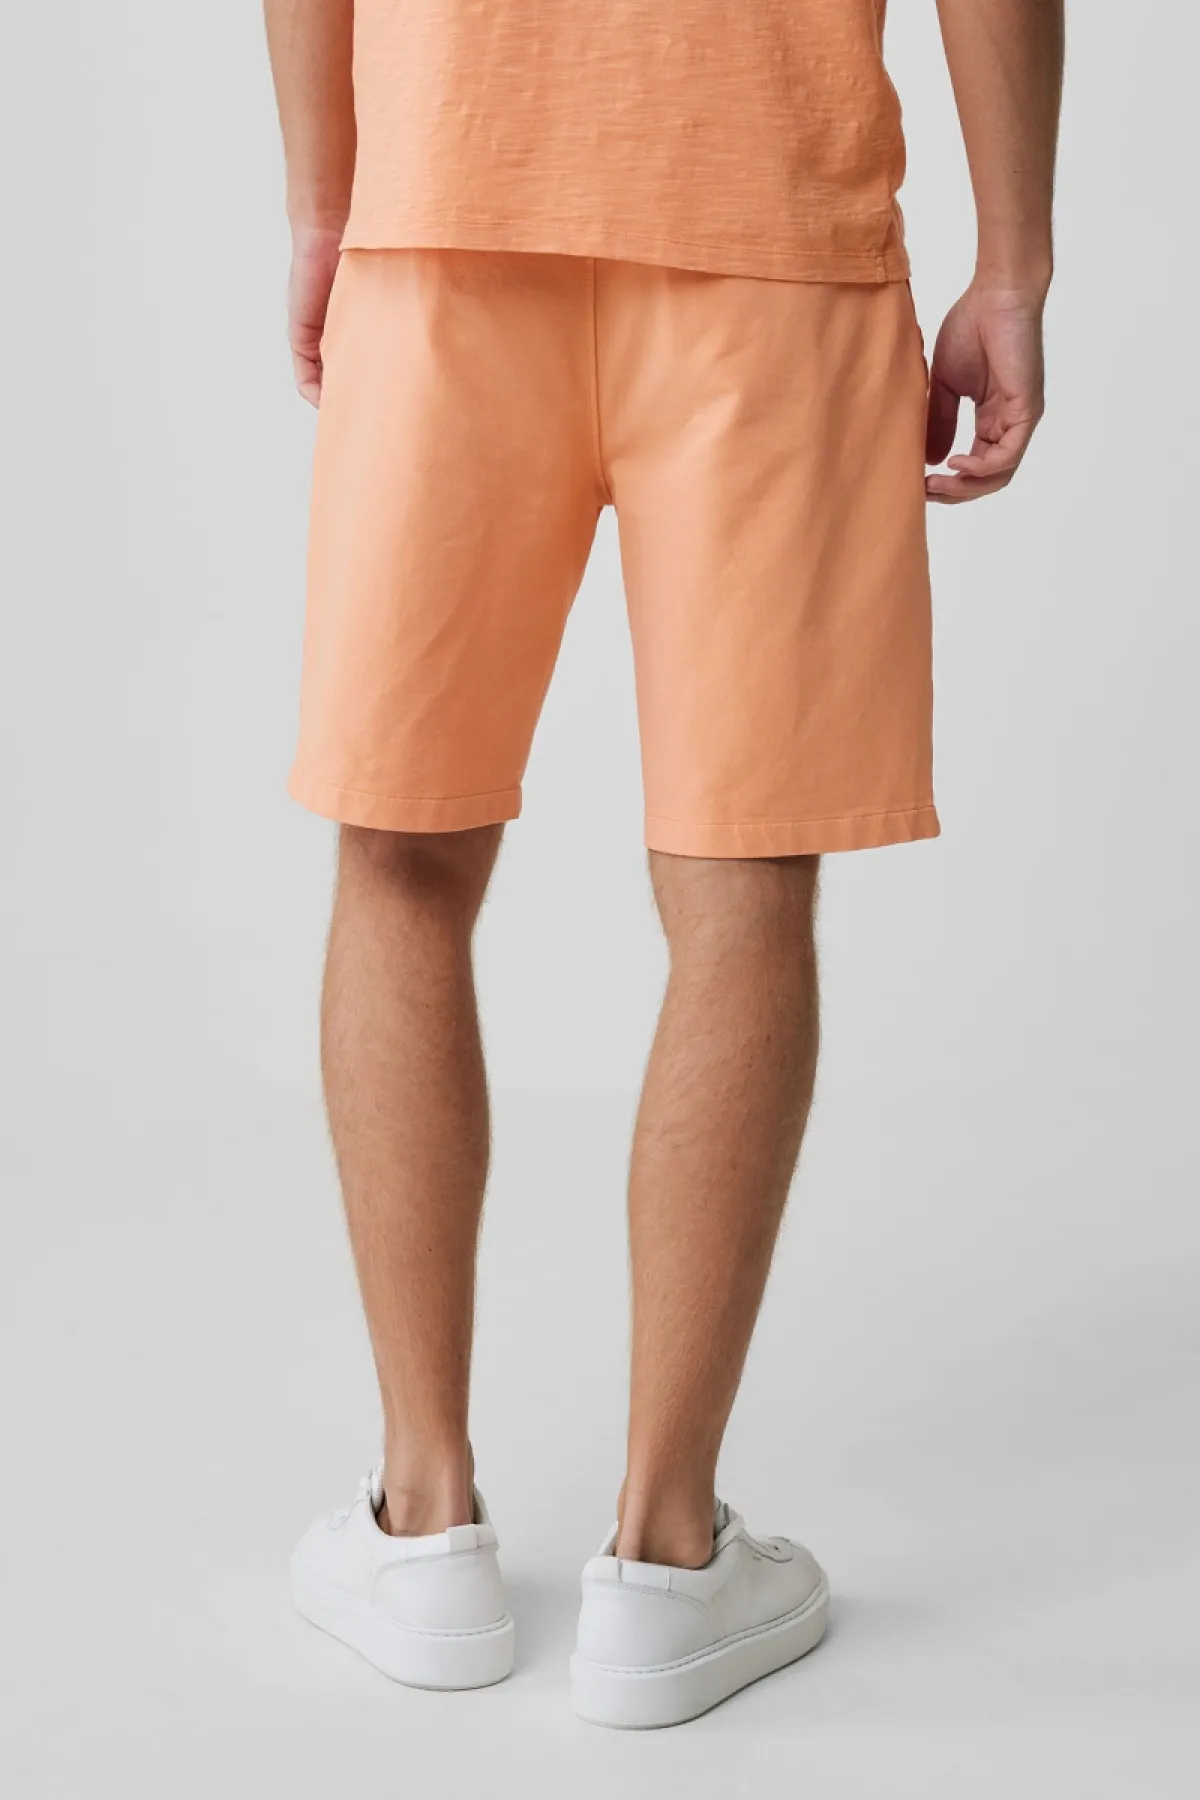 Sweat shorts oranje